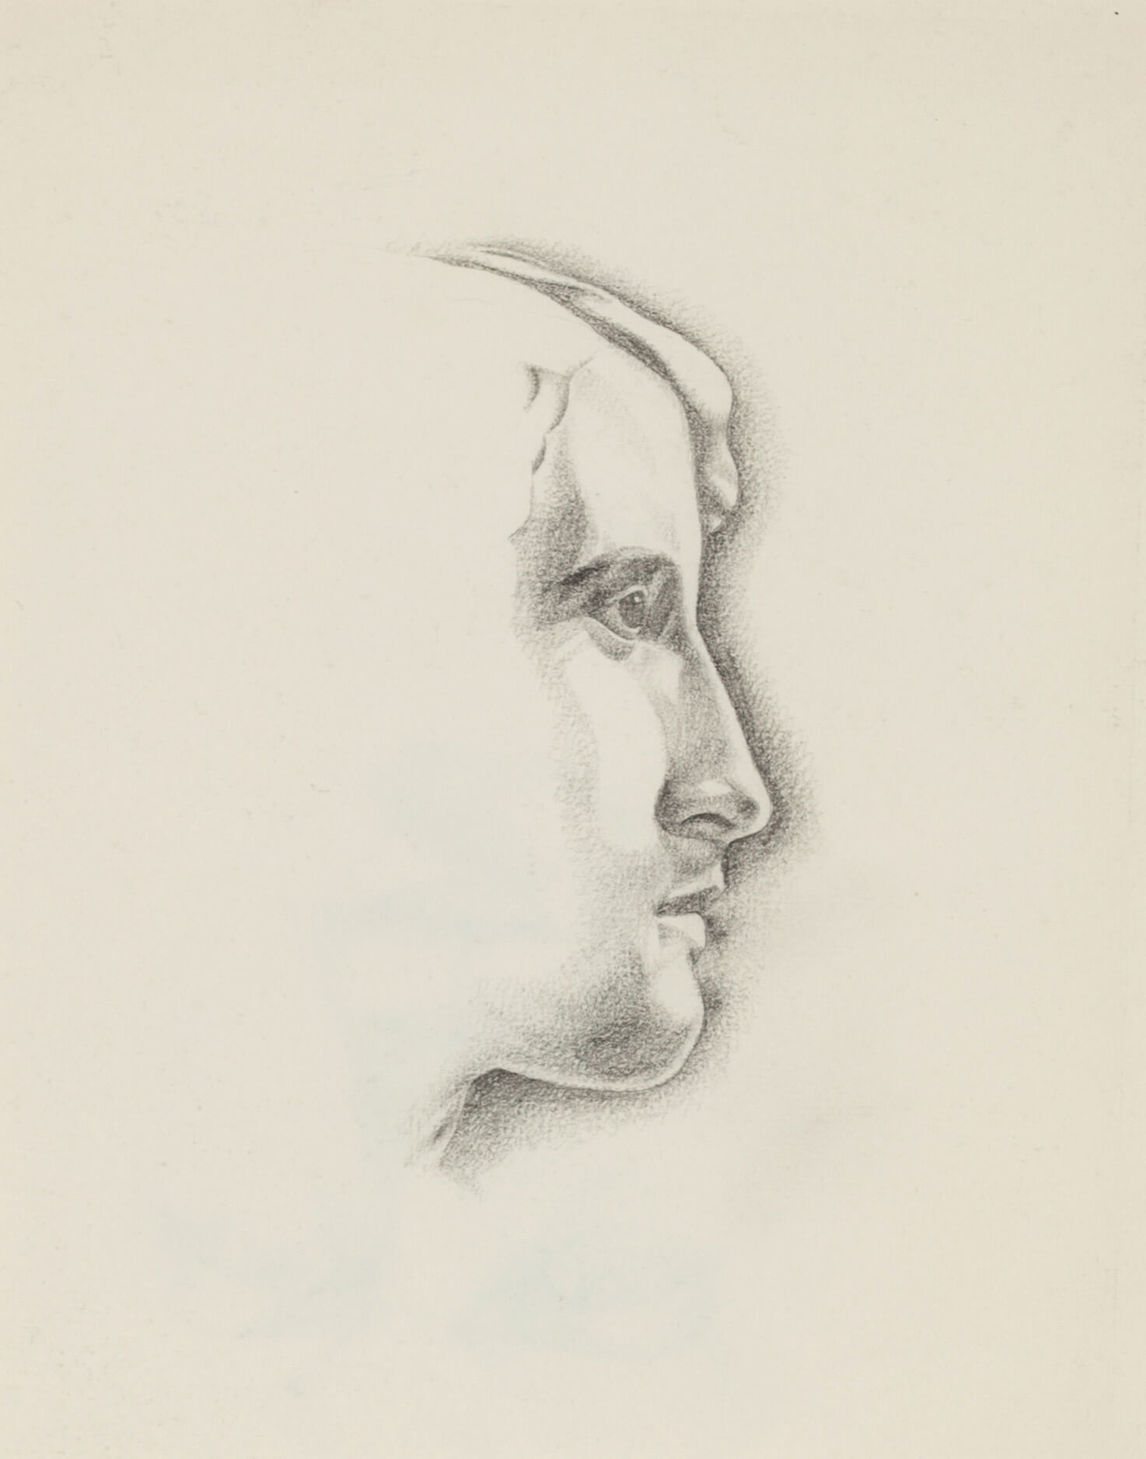 Artist’s Wife # 1 (La Femme de l’artiste no 1), 1934